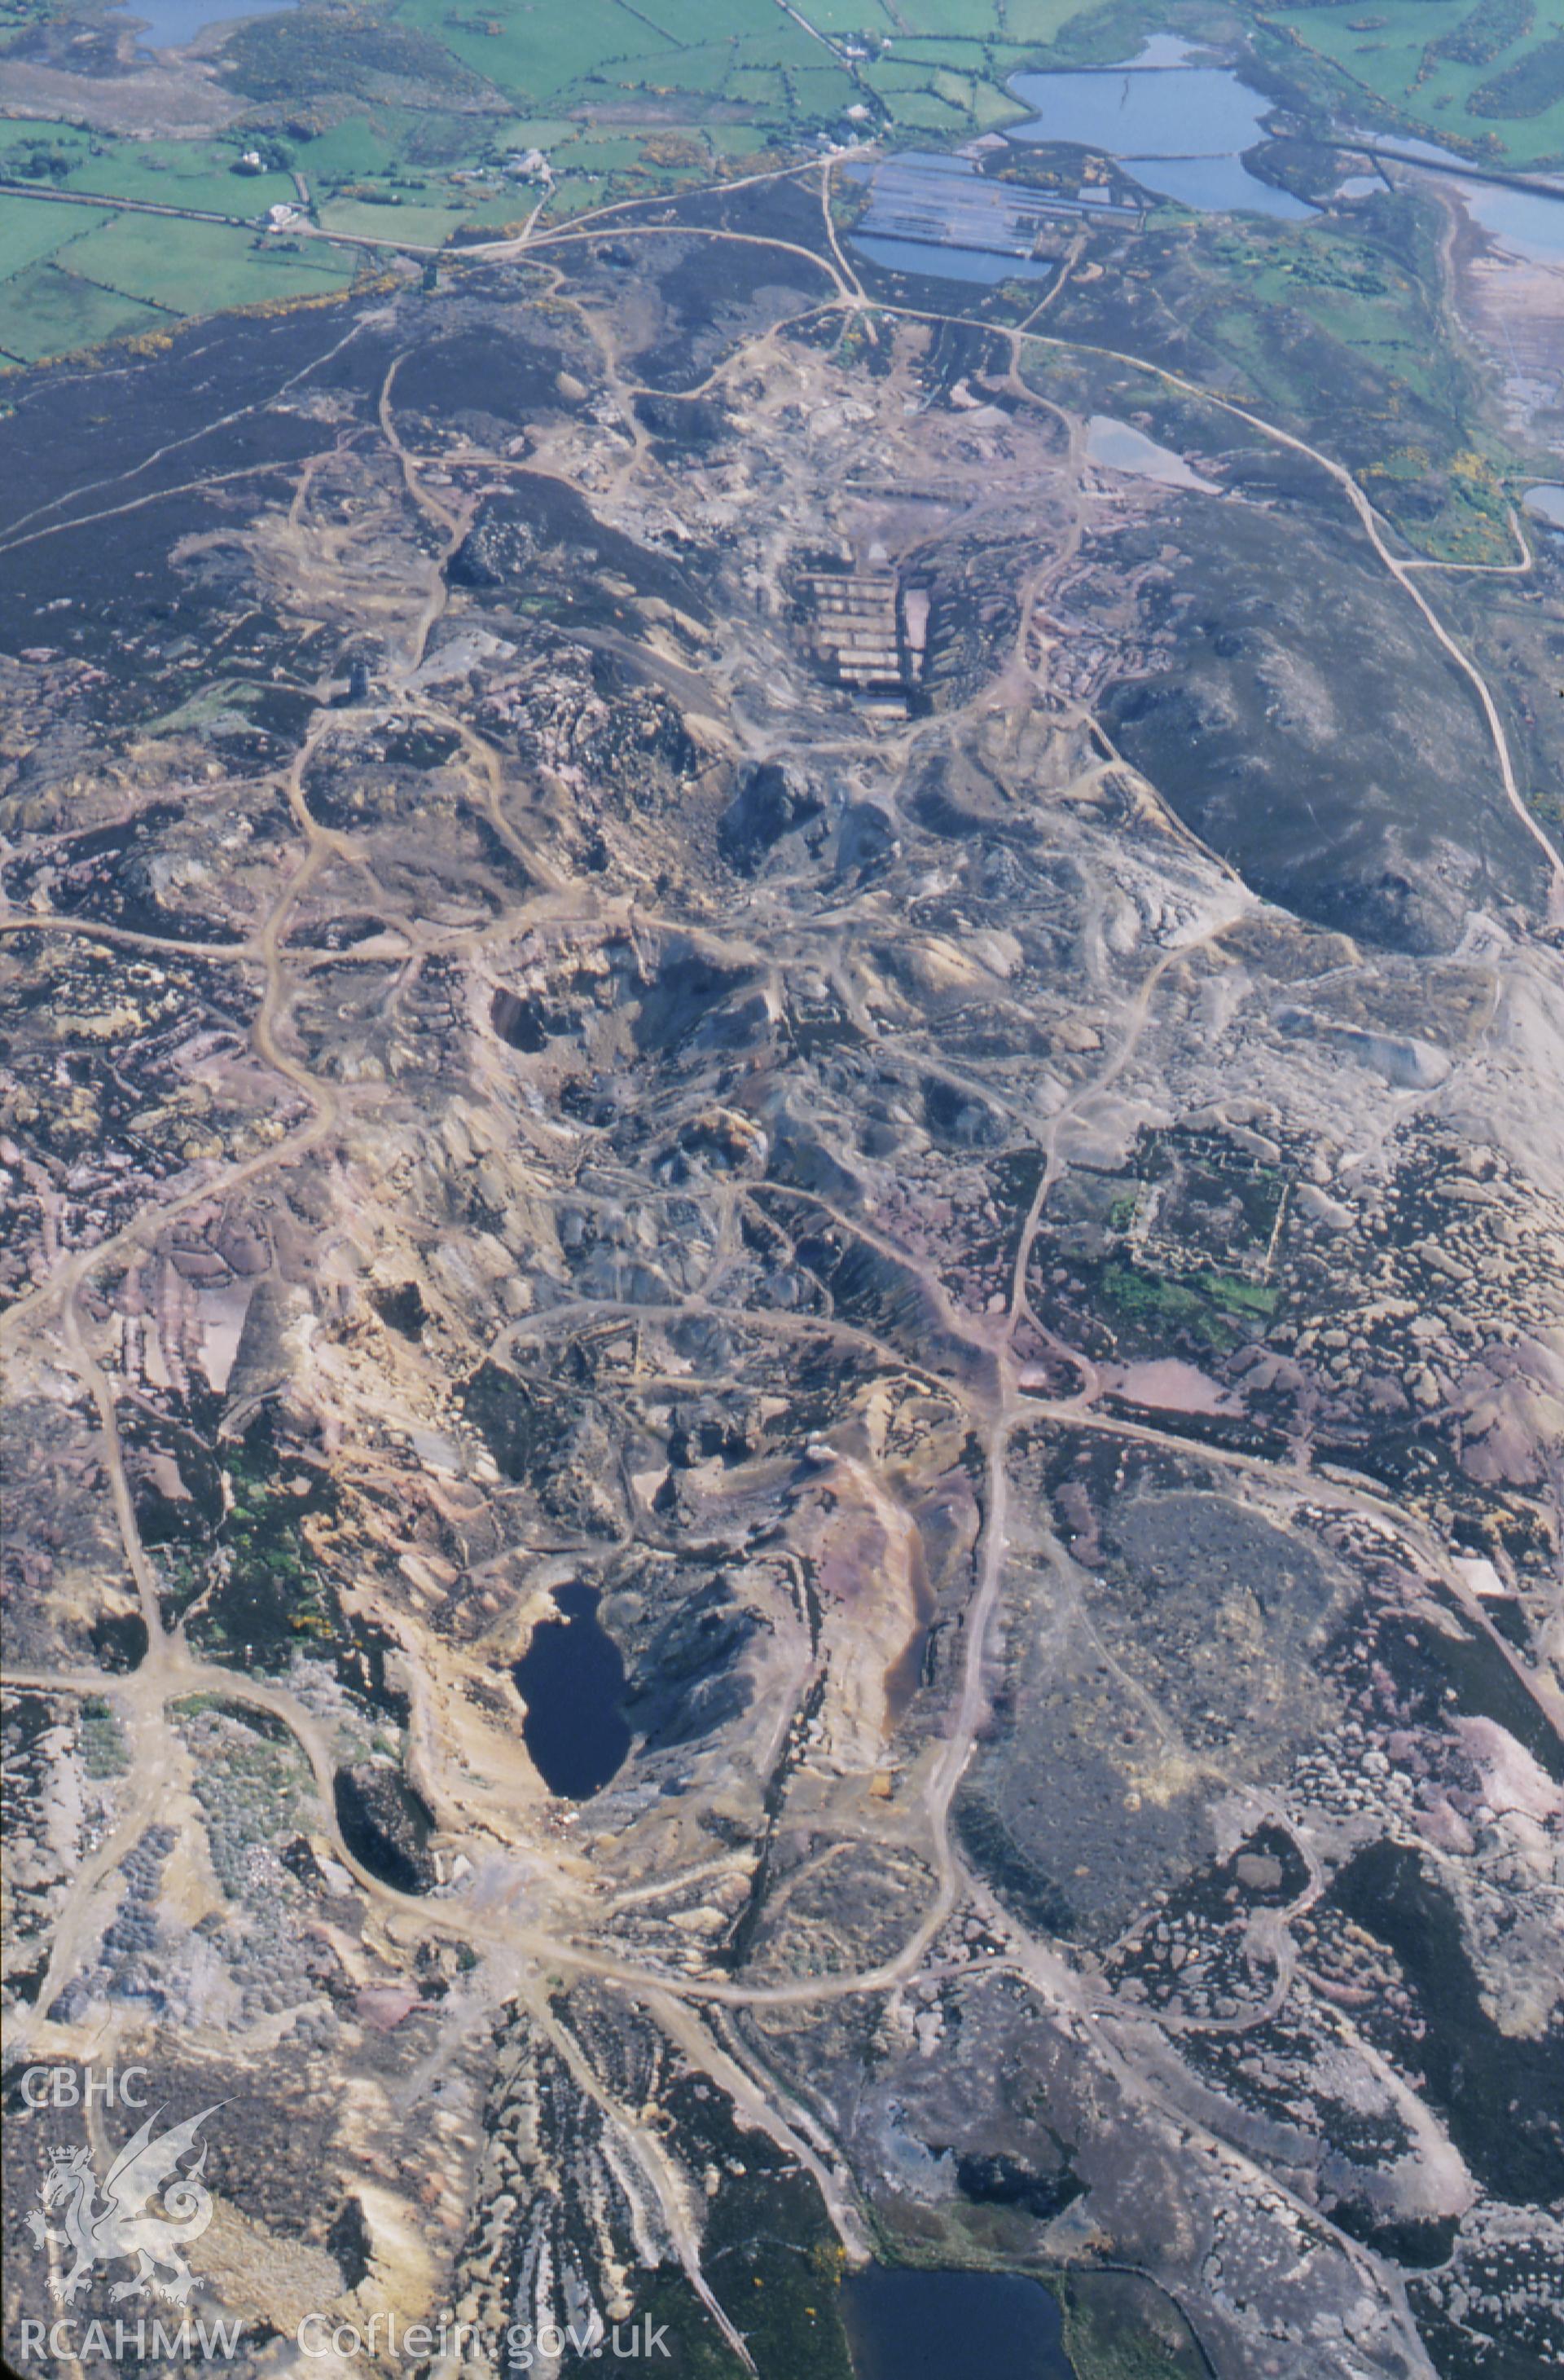 RCAHMW colour slide oblique aerial photograph of Parys Mountain Copper Mines, Amlwch, taken by C.R. Musson, 30/05/94